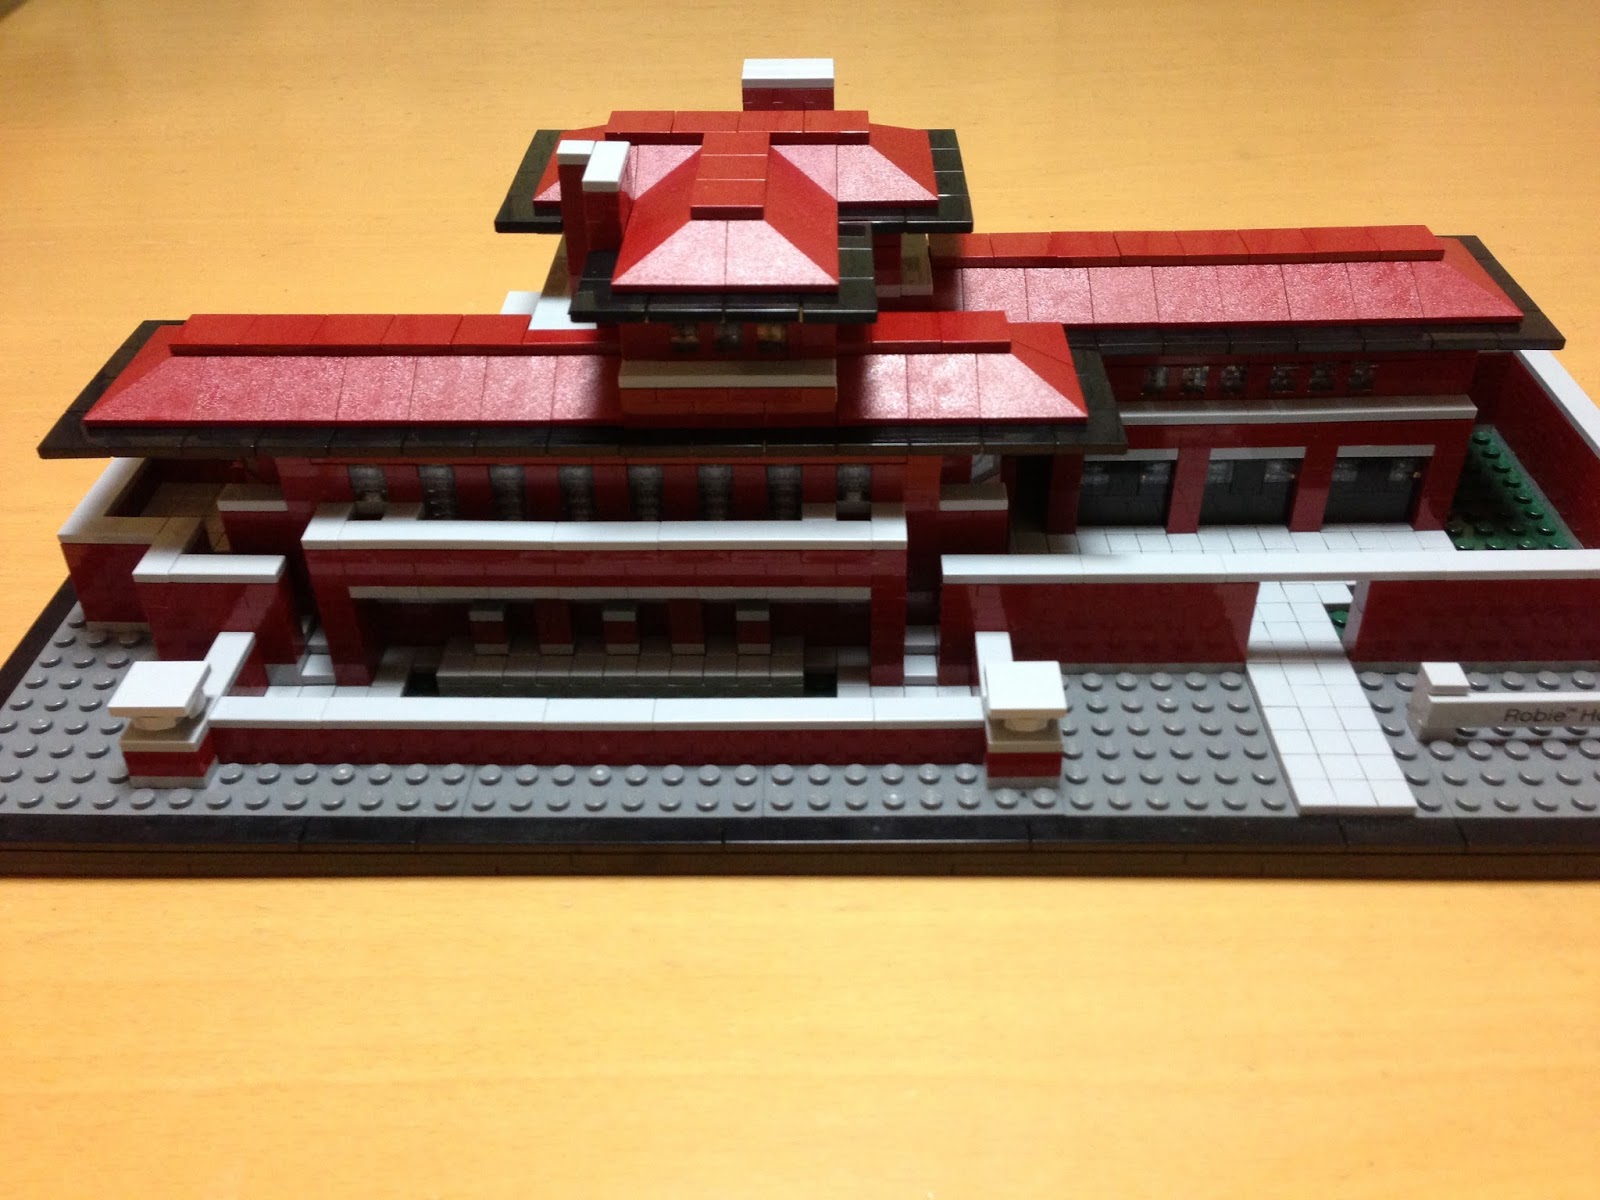 LEGOALFABlog: レゴ21010アーキテクチャーロビー邸を開封